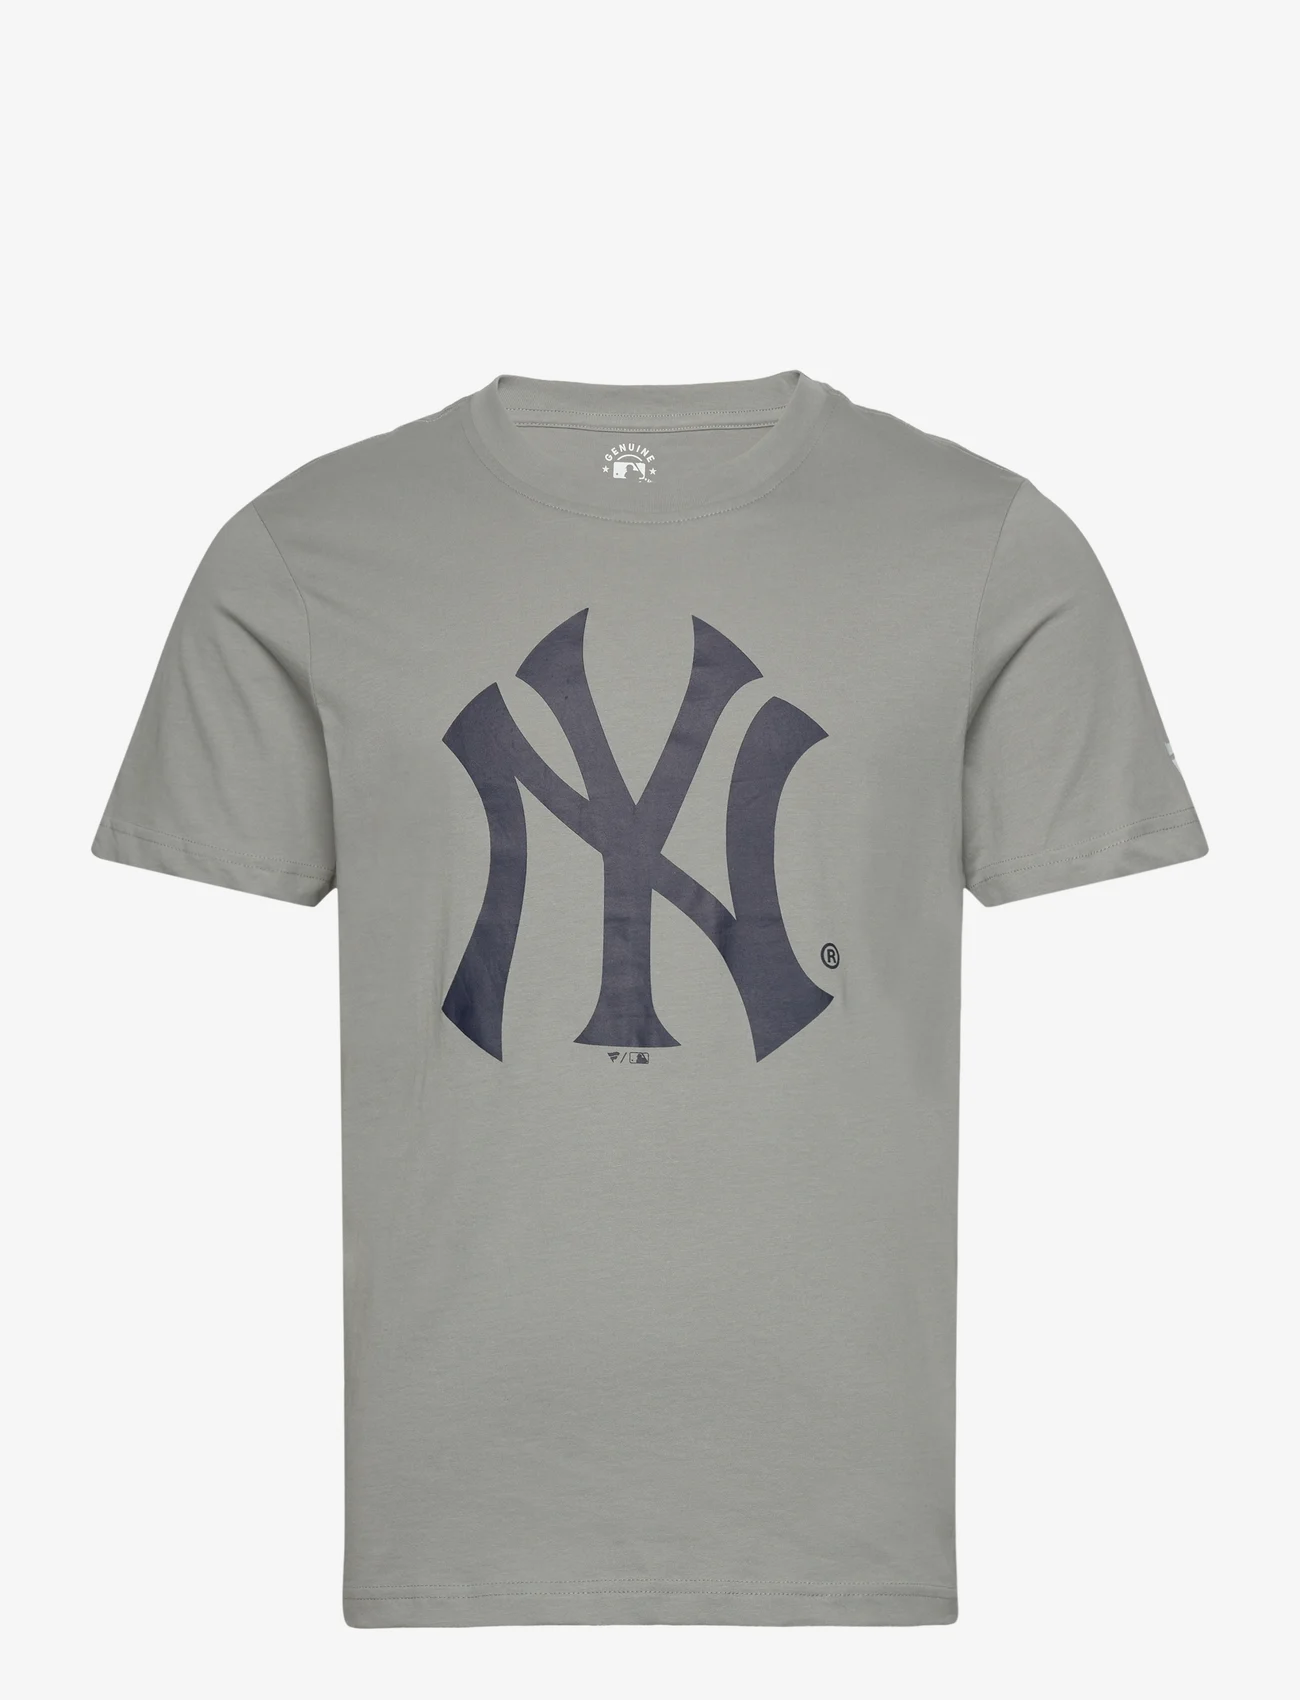 Fanatics - New York Yankees Primary Logo Graphic T-Shirt - short-sleeved t-shirts - stone gray - 0